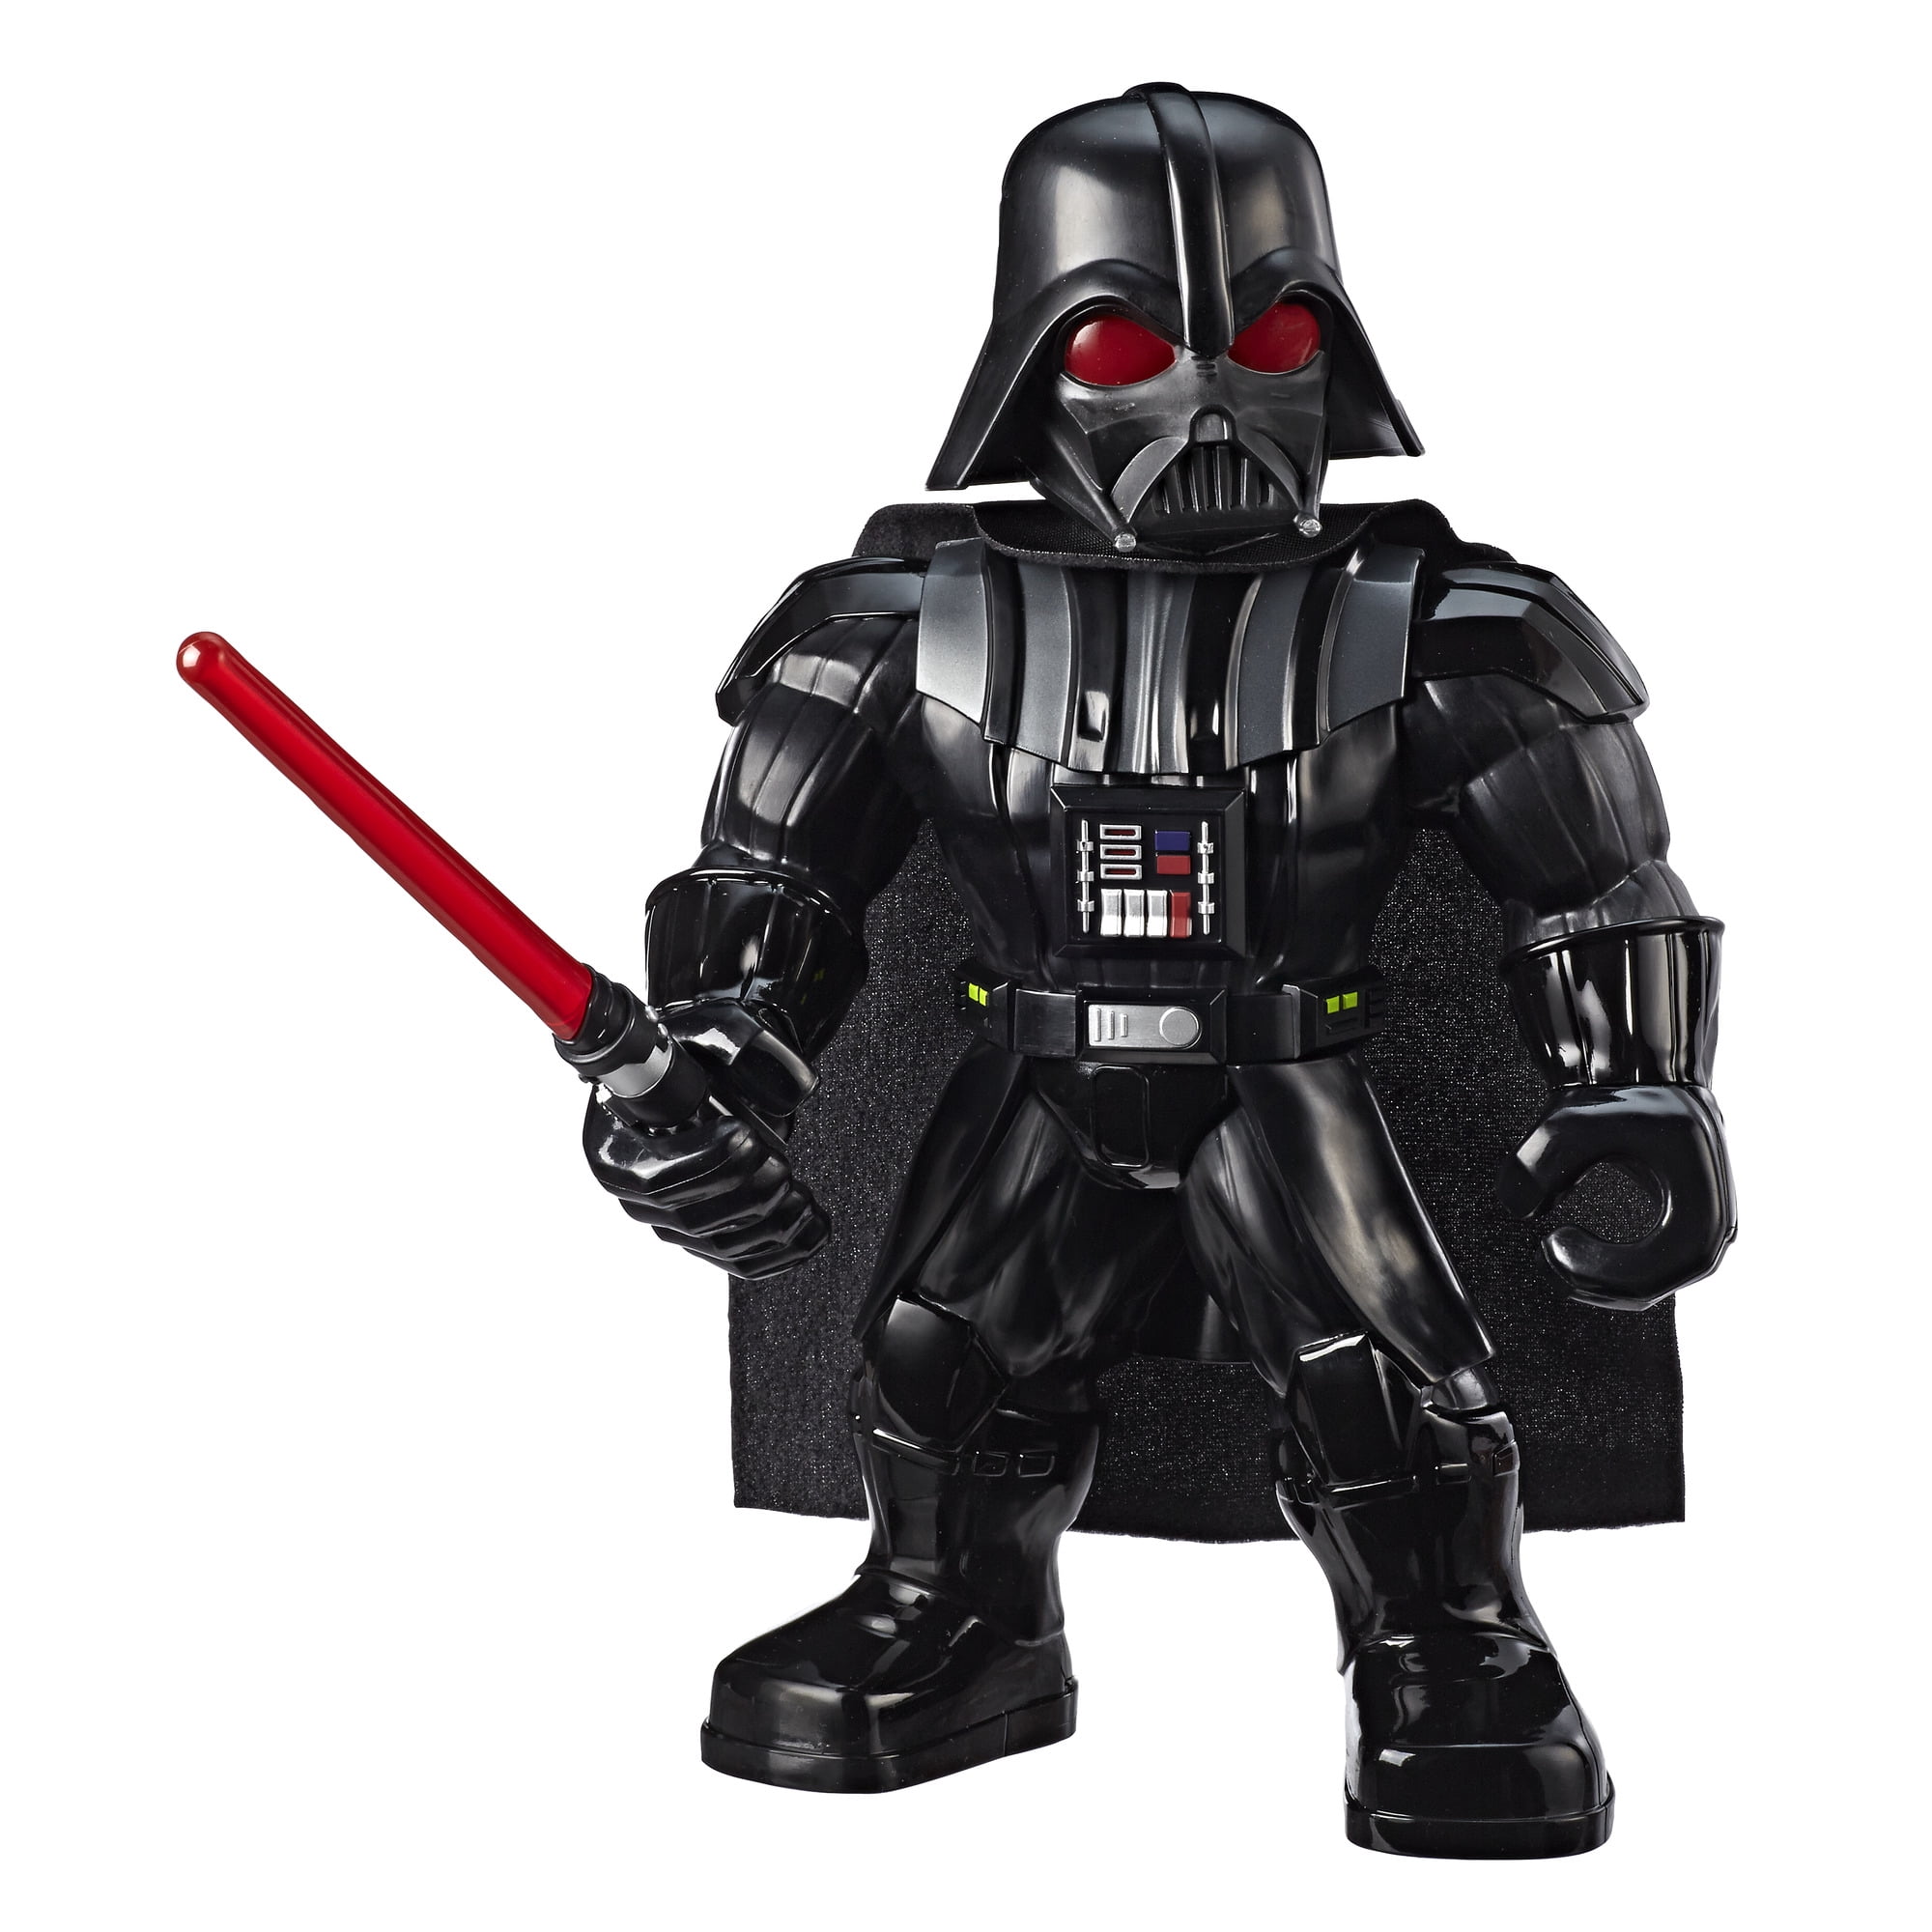 Set 4 Pieces Star Wars Yoda R2-D2 Darth Vader Converge Toy Figure Doll Vol.1 New 